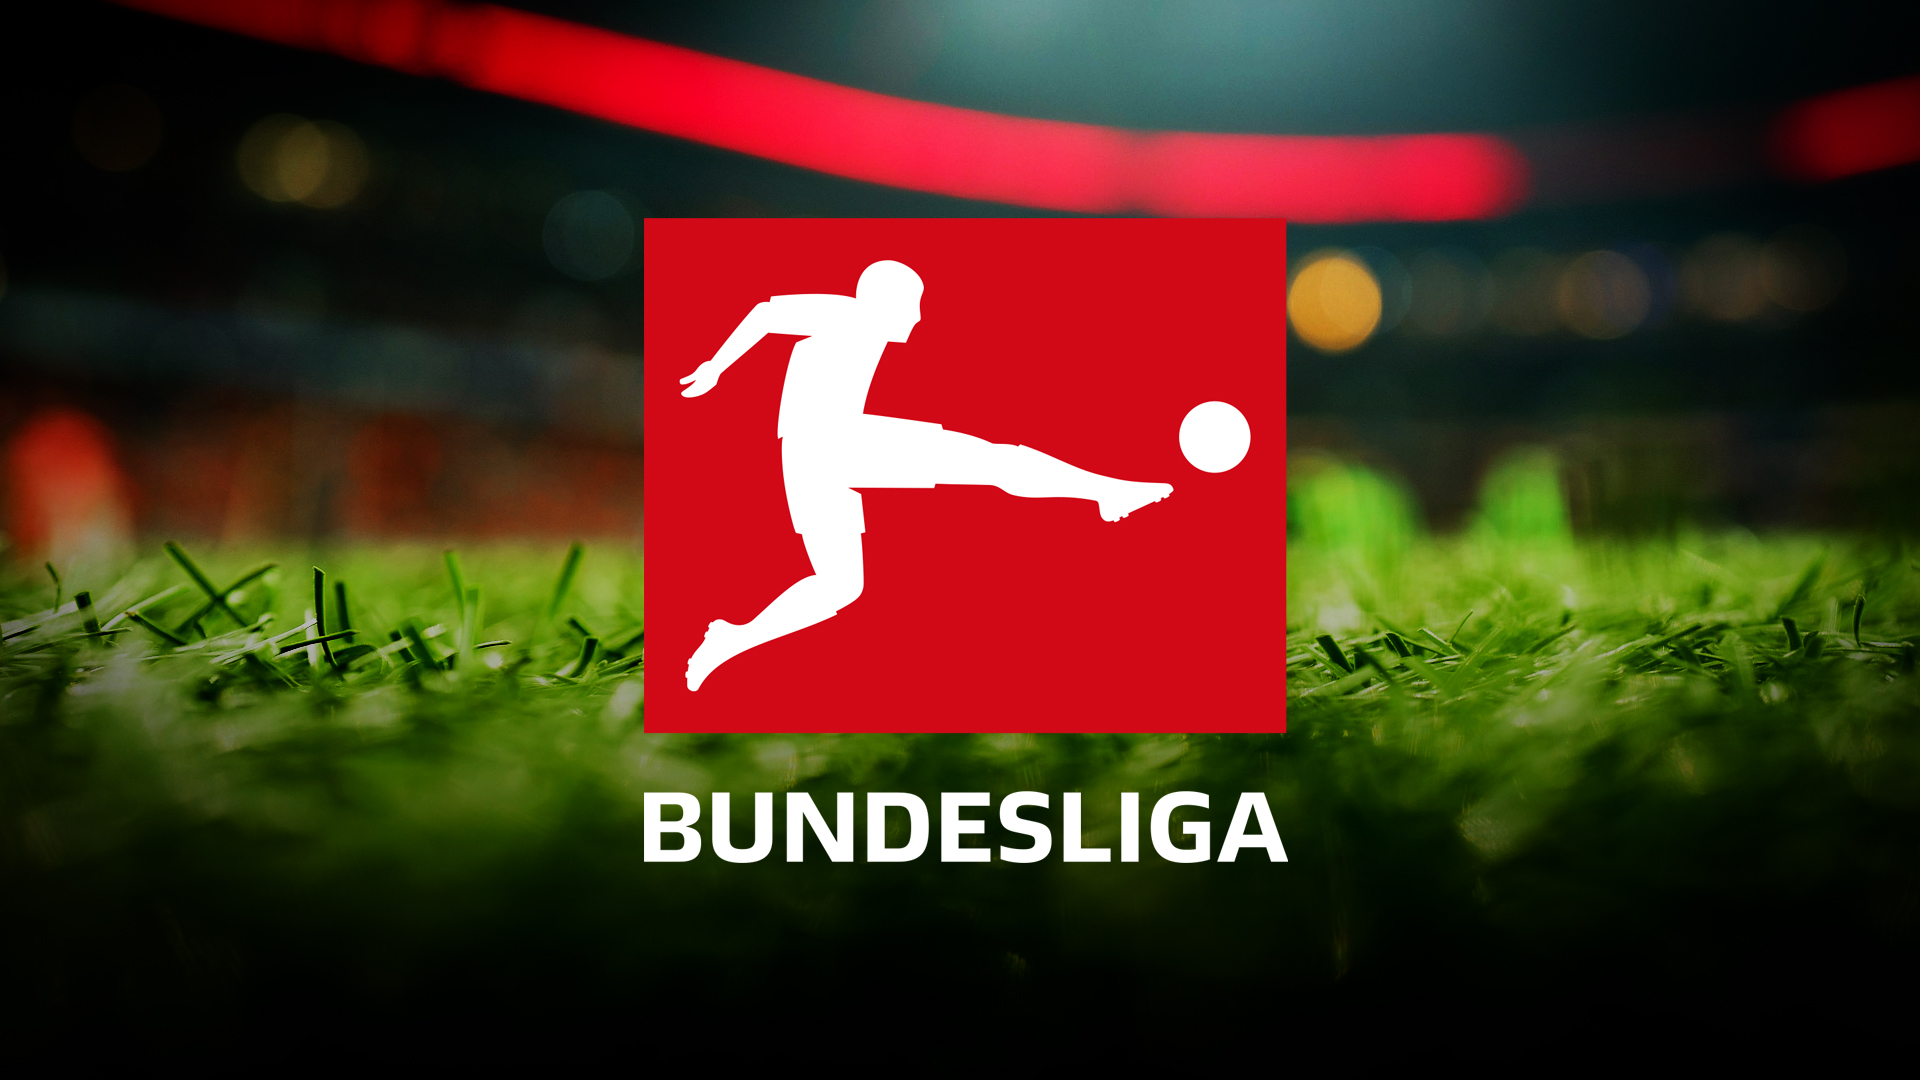 Bundesliga Revenue Down By 5.4 per cent in 2019/2020